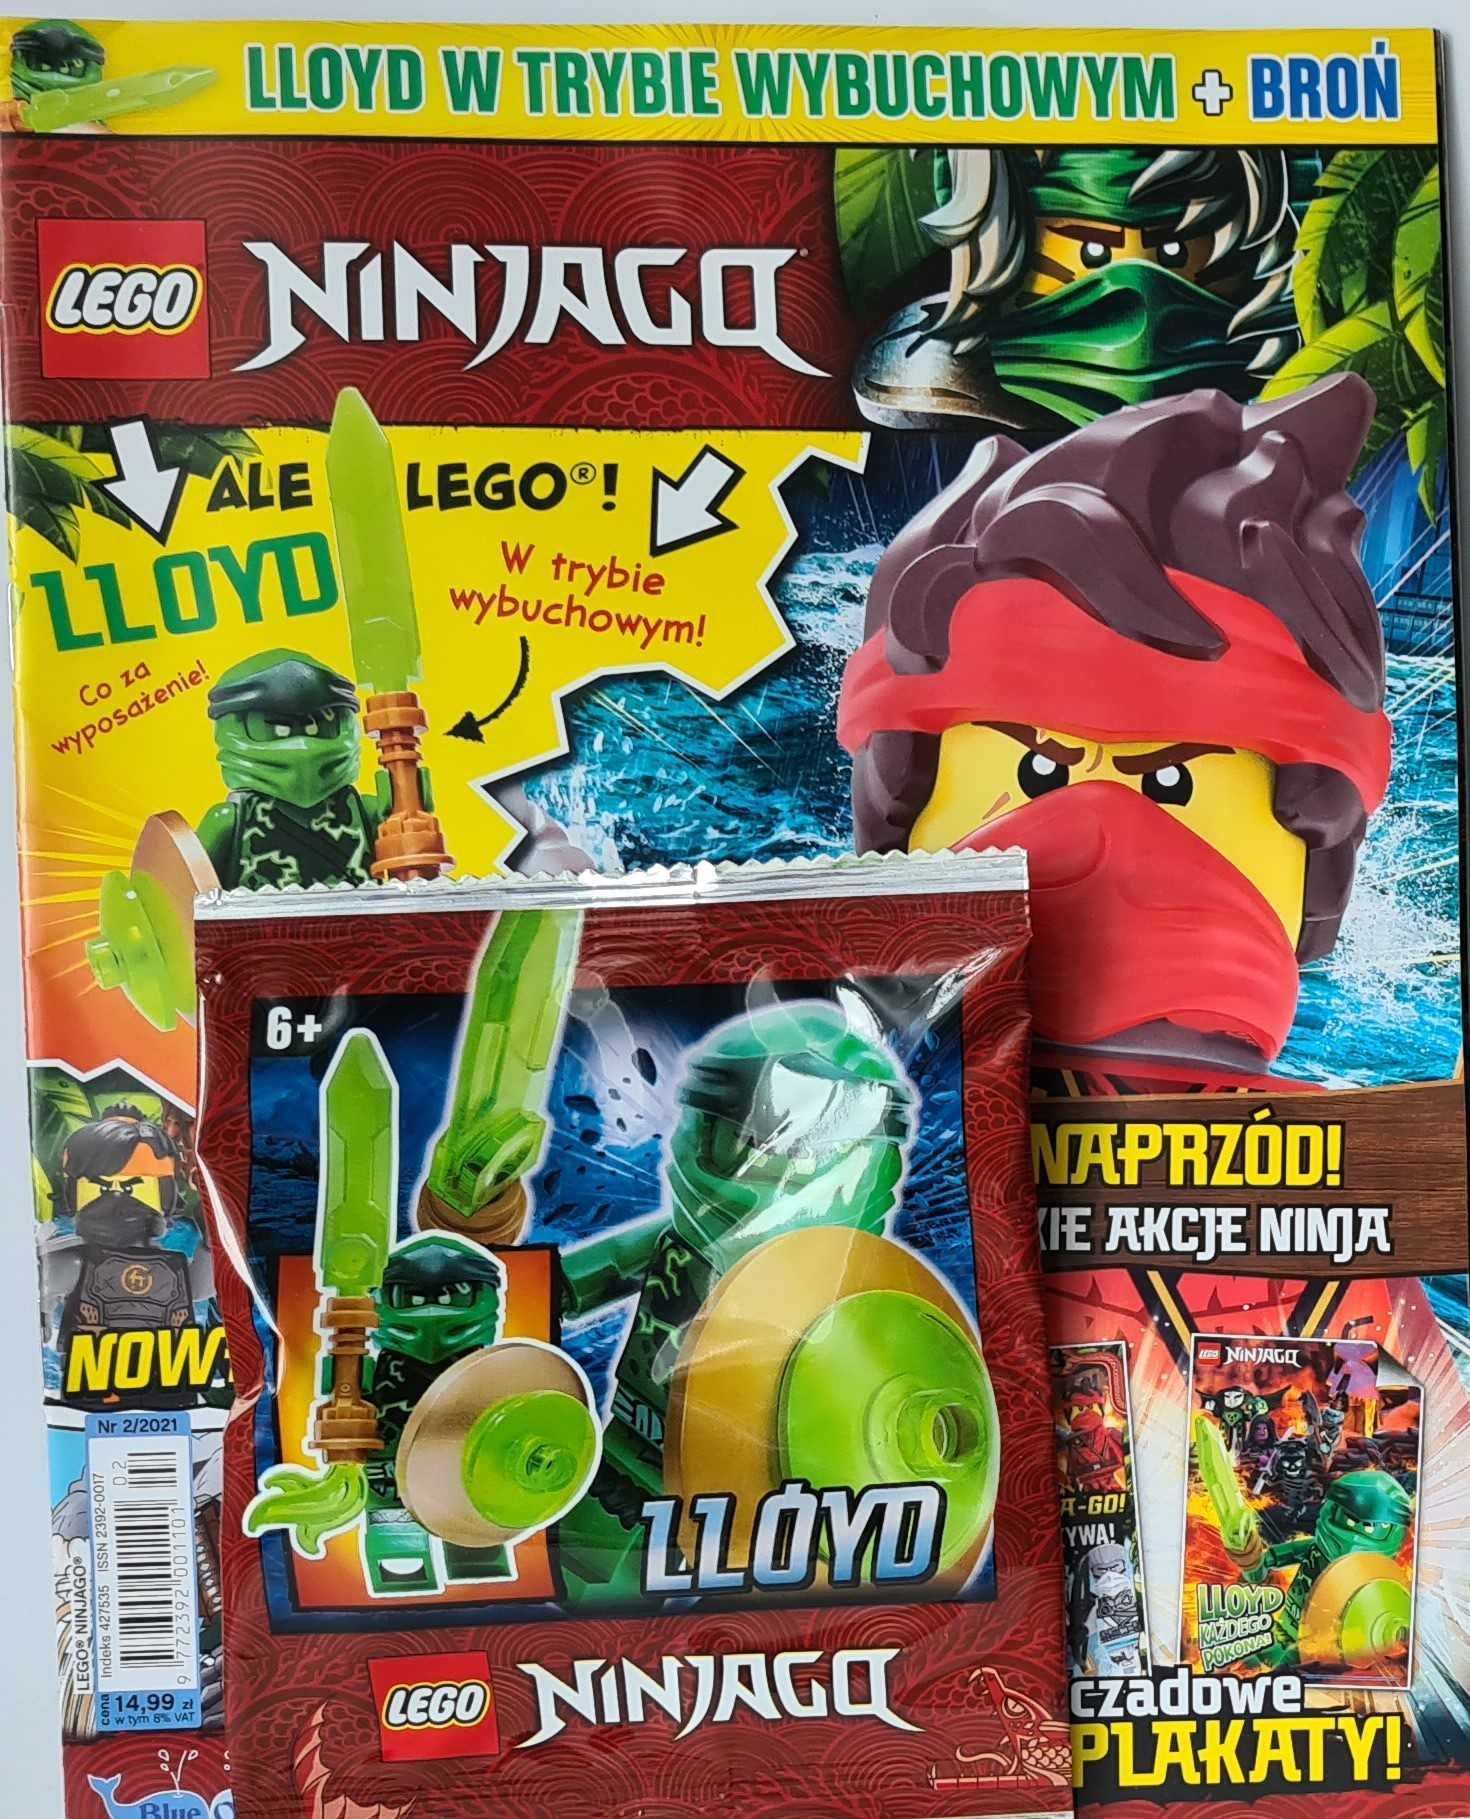 LEGO 892177 NINJAGO 2/7/2021 + Kai+ Turbopalnik + Loyd njo766